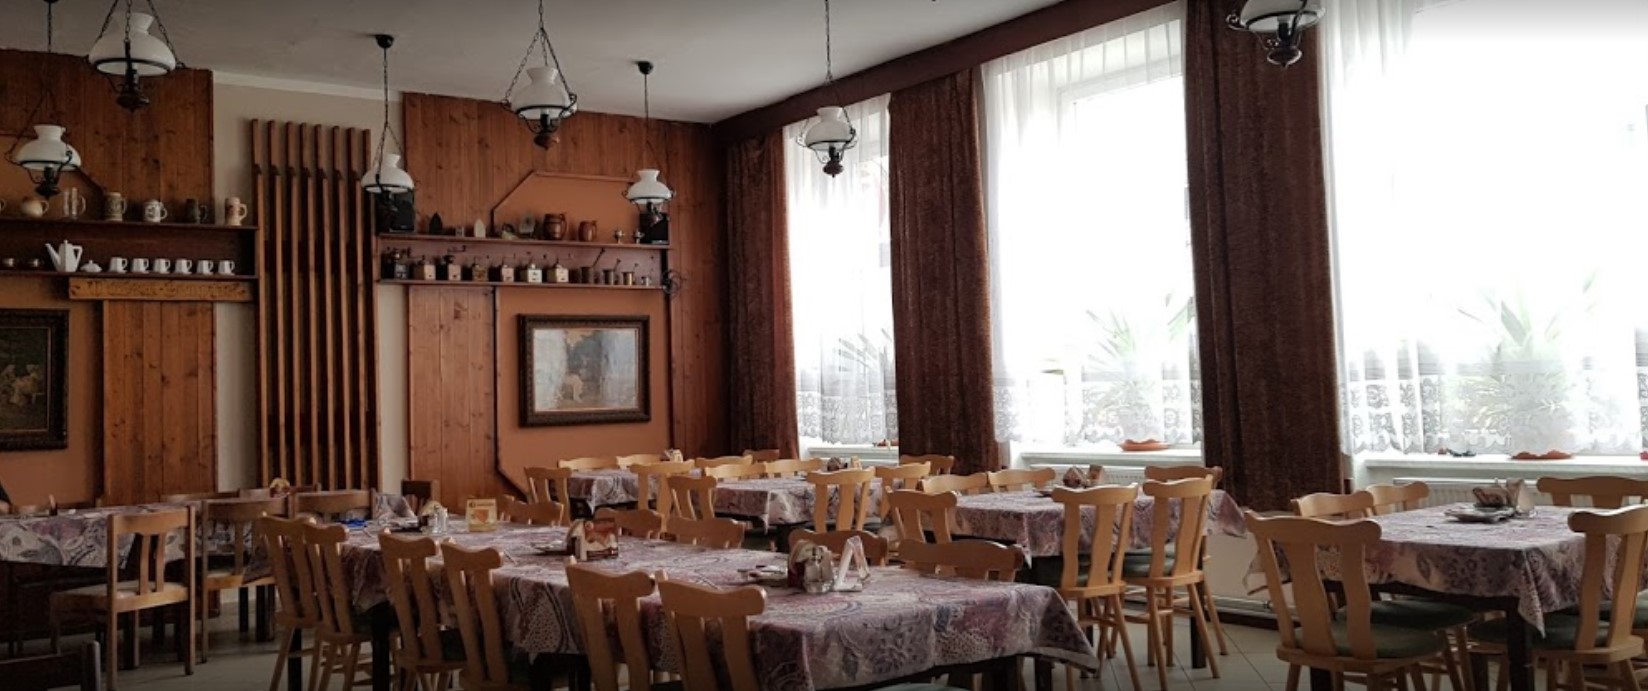 Restaurace a Hotel U Šimáka